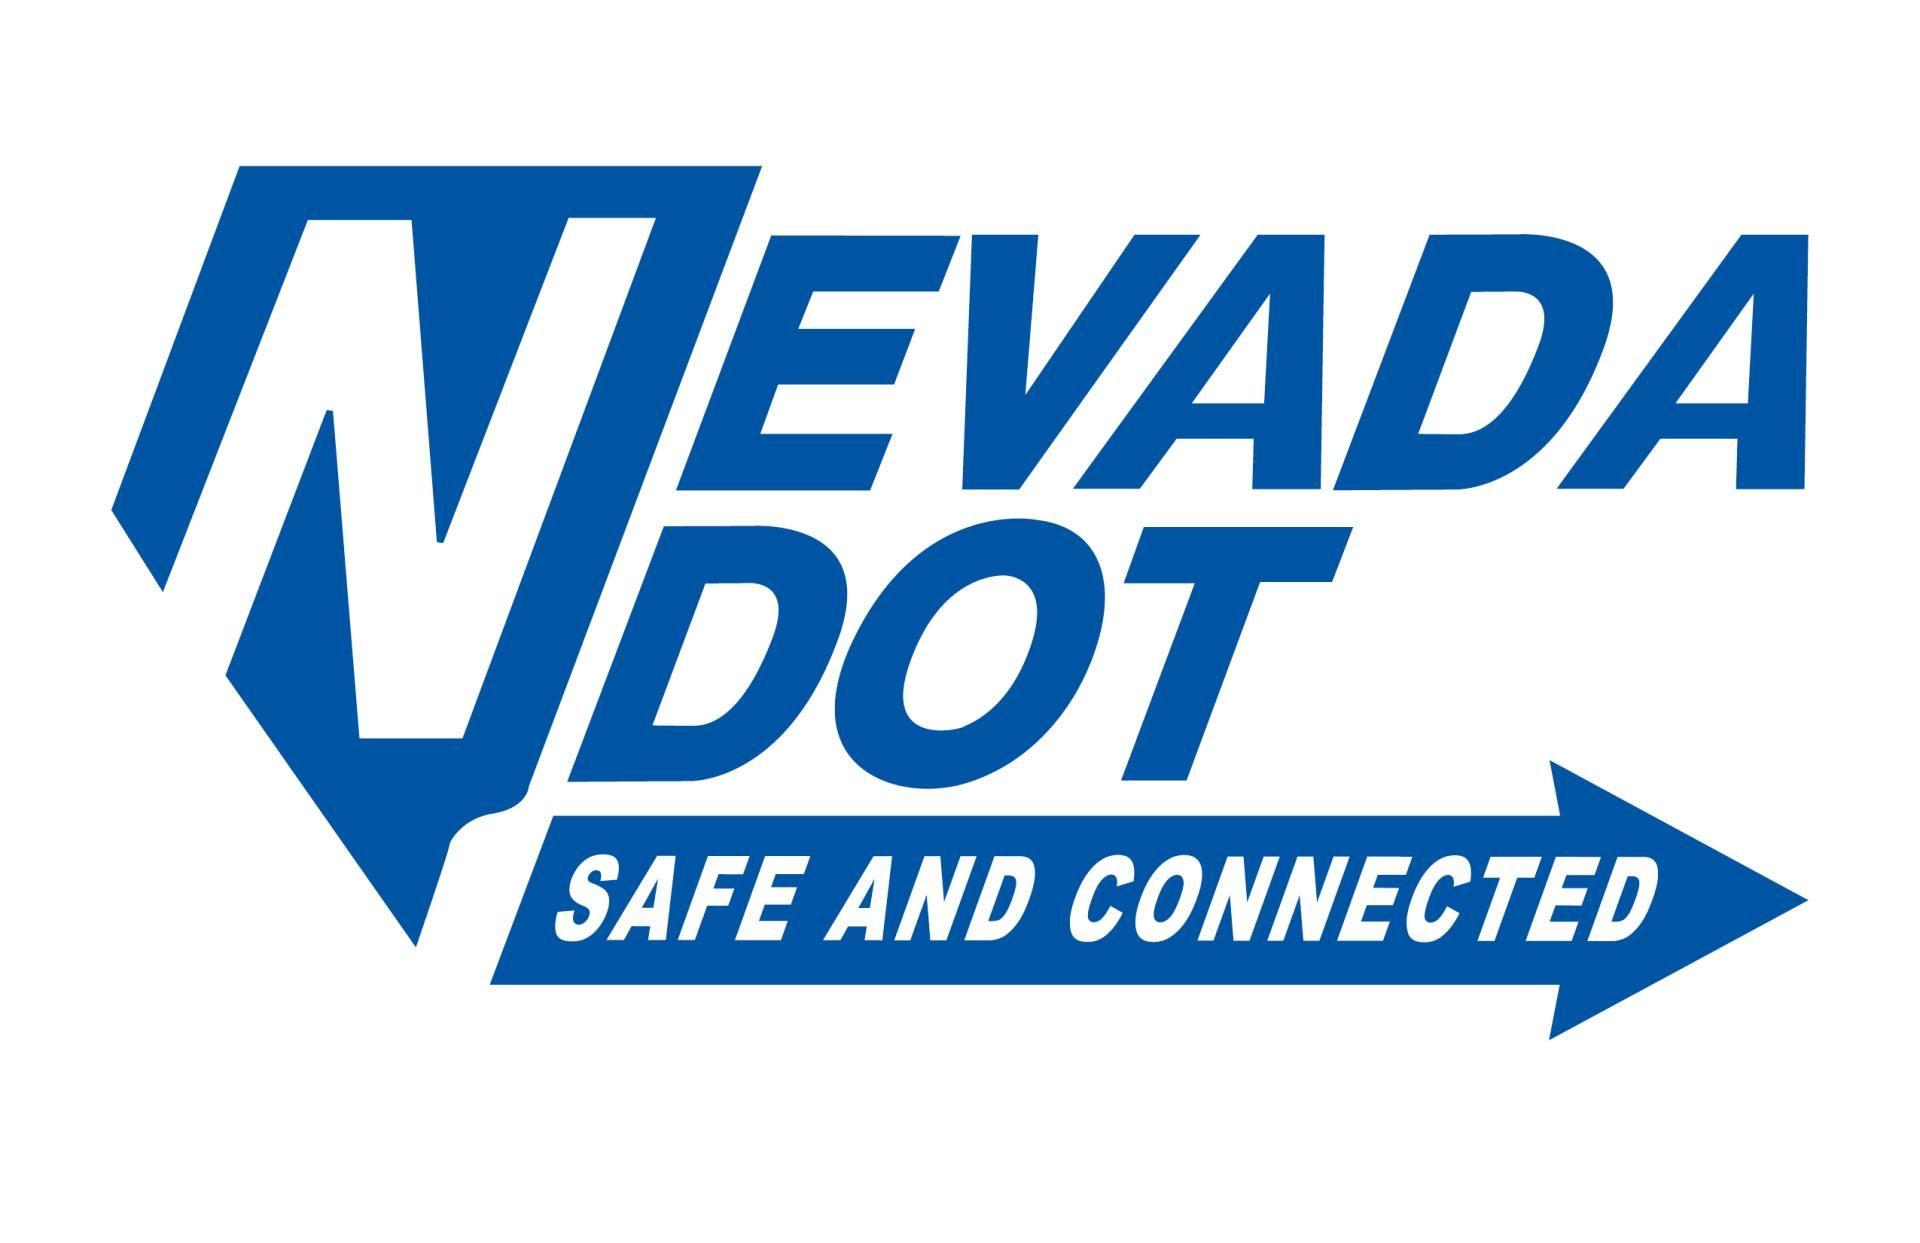 NDOT Logo - Media Contacts. Nevada Department of Transportation